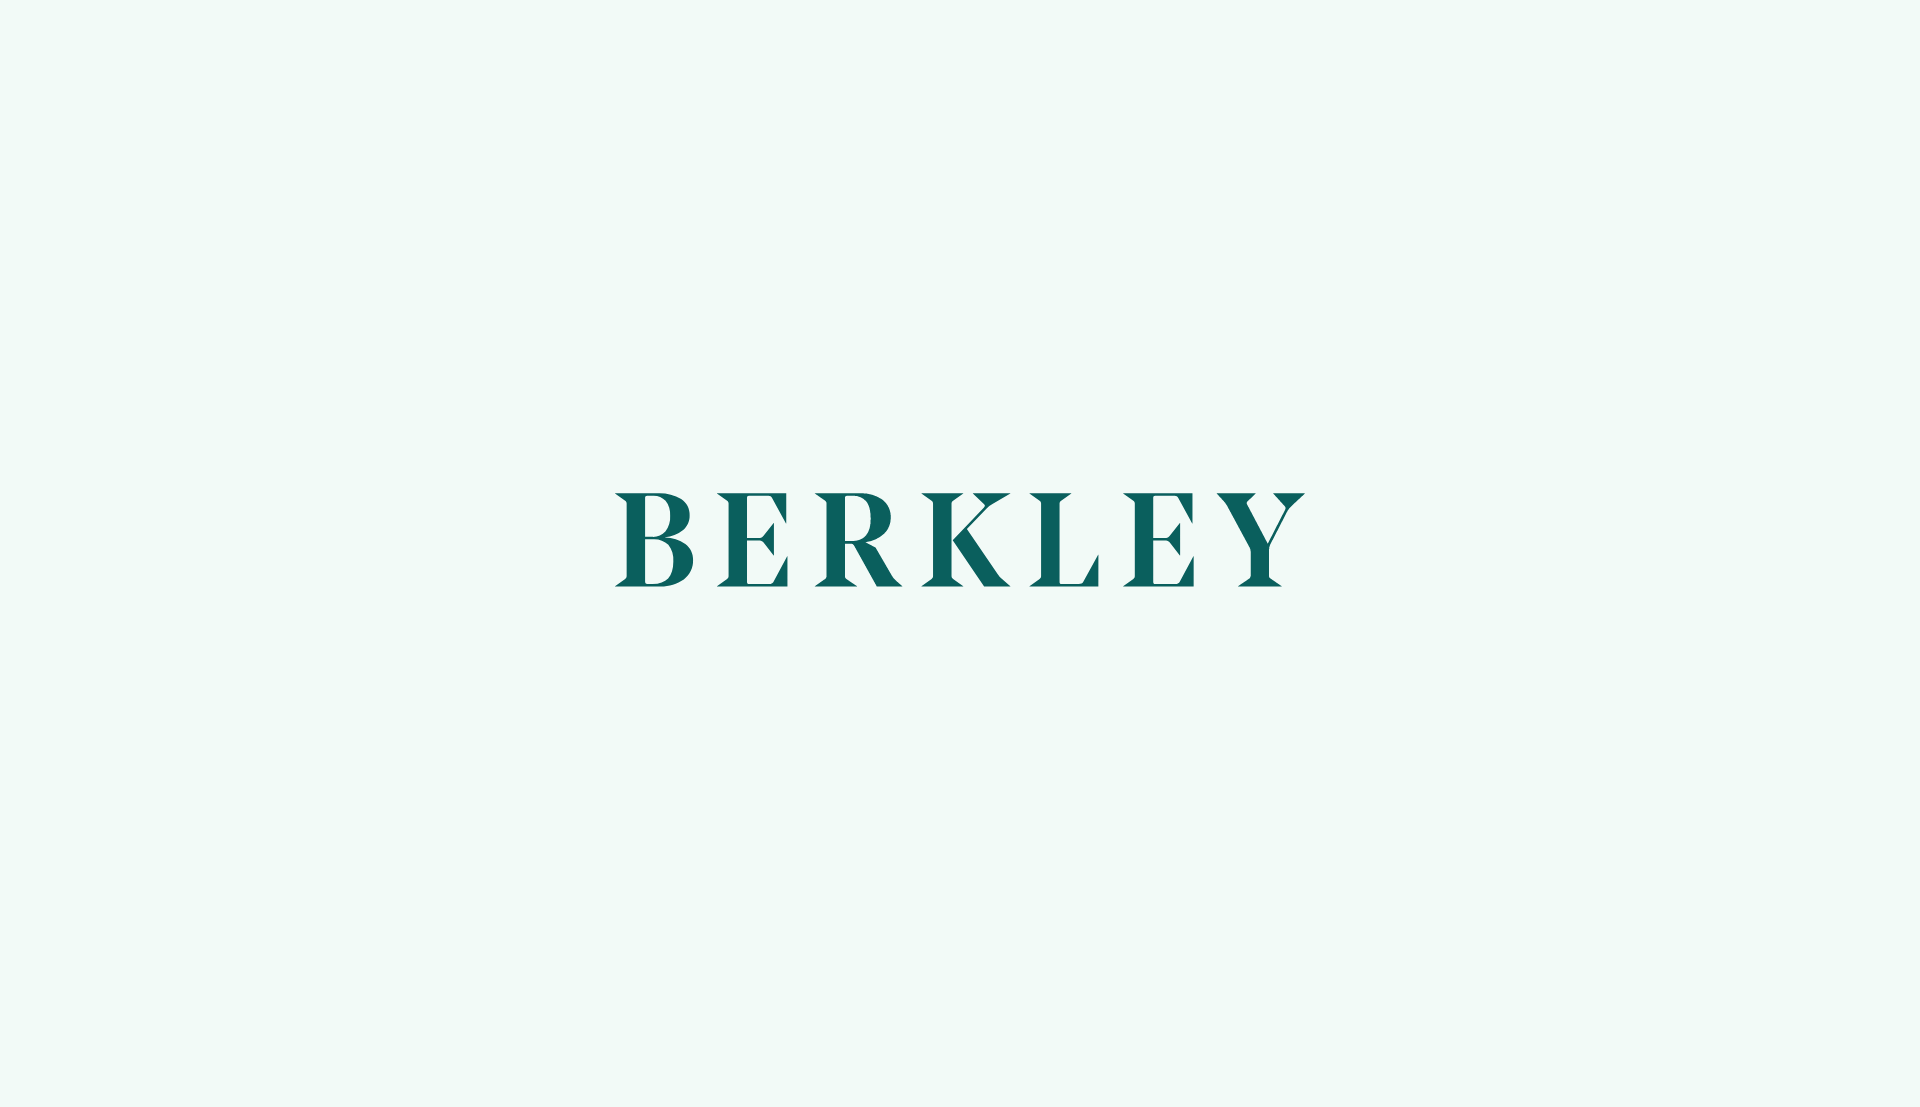 Berkley Care Group Branding - Baz Jobson